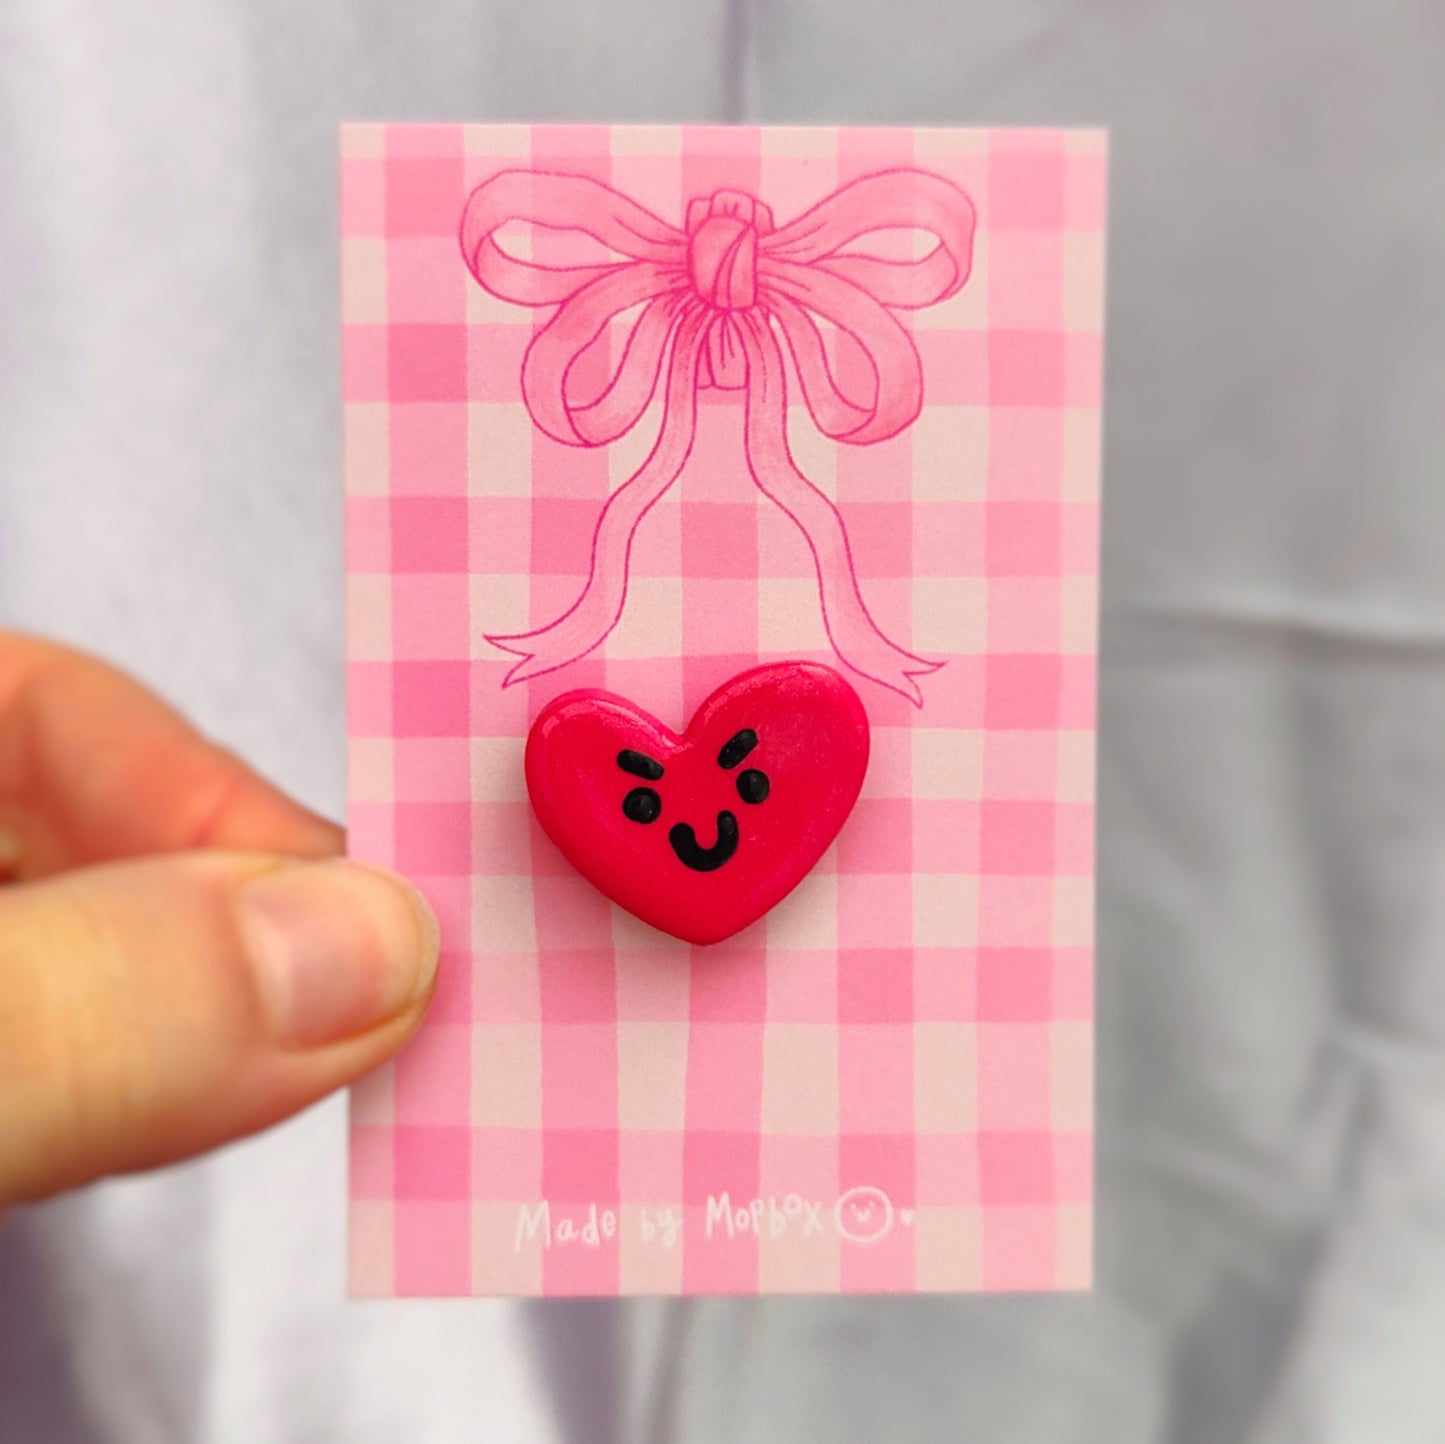 Love Heart Handmade Pin Badge -Spiteful Heart in Red